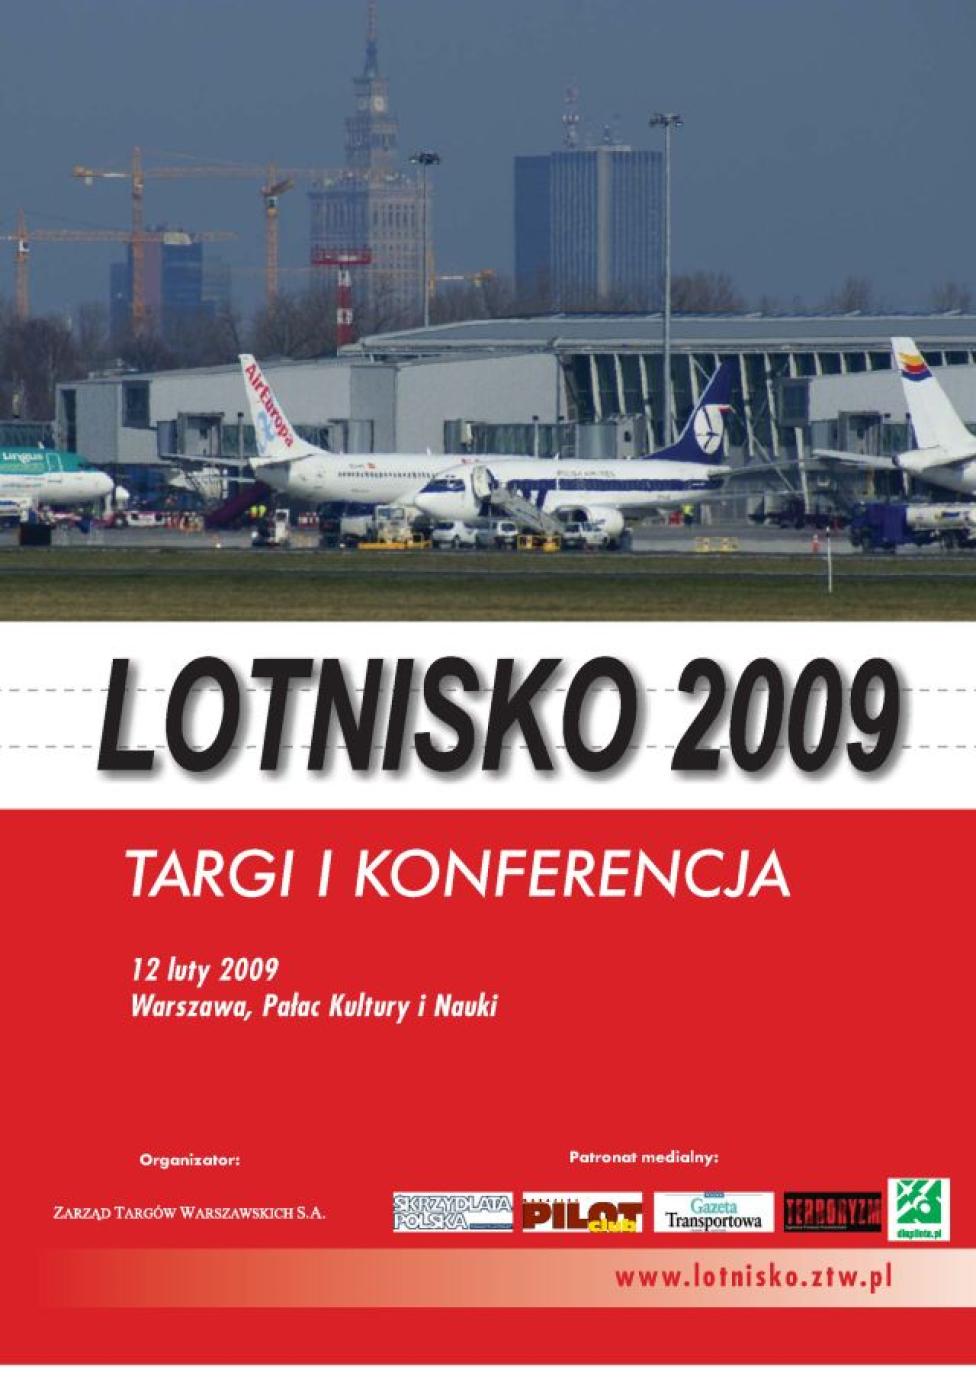 Konferencja "LOTNISKO 2009"